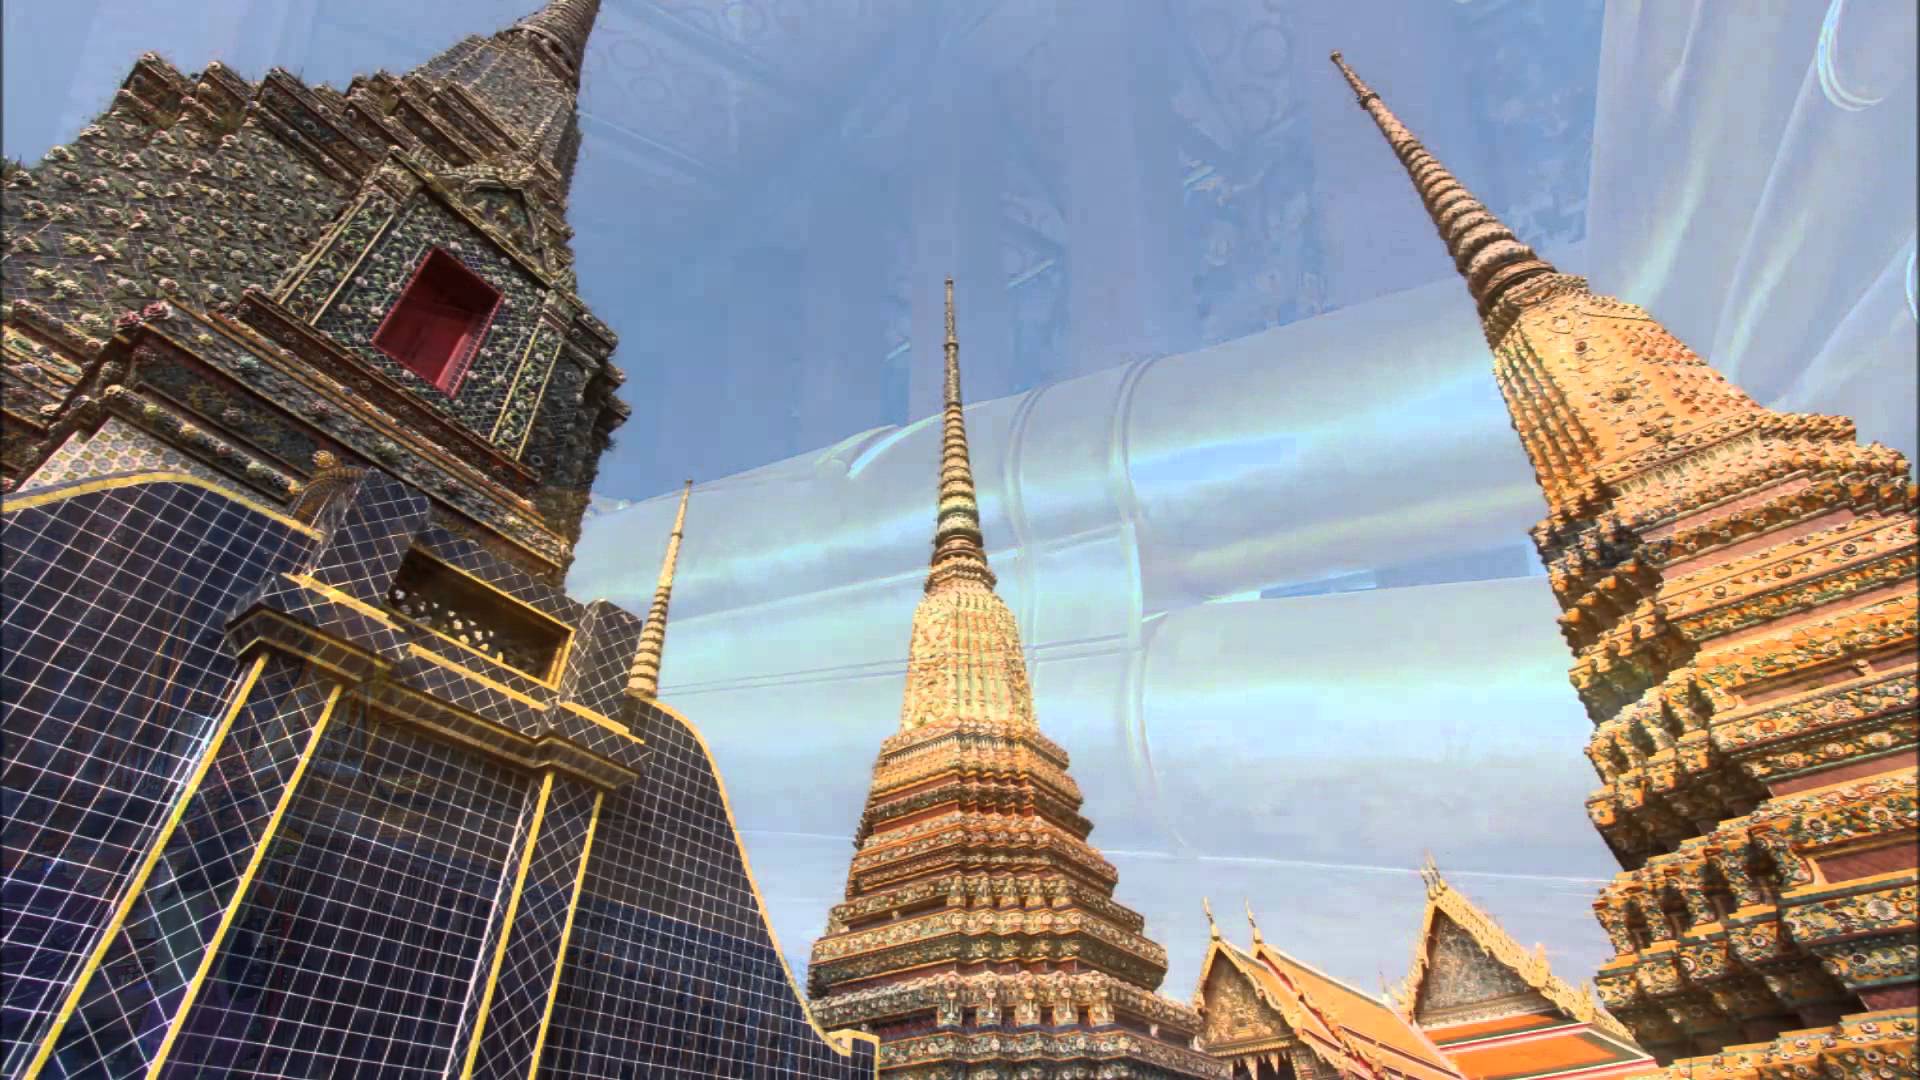 Bangkok Slideshow Travel Photos Of Grand Palace Chao